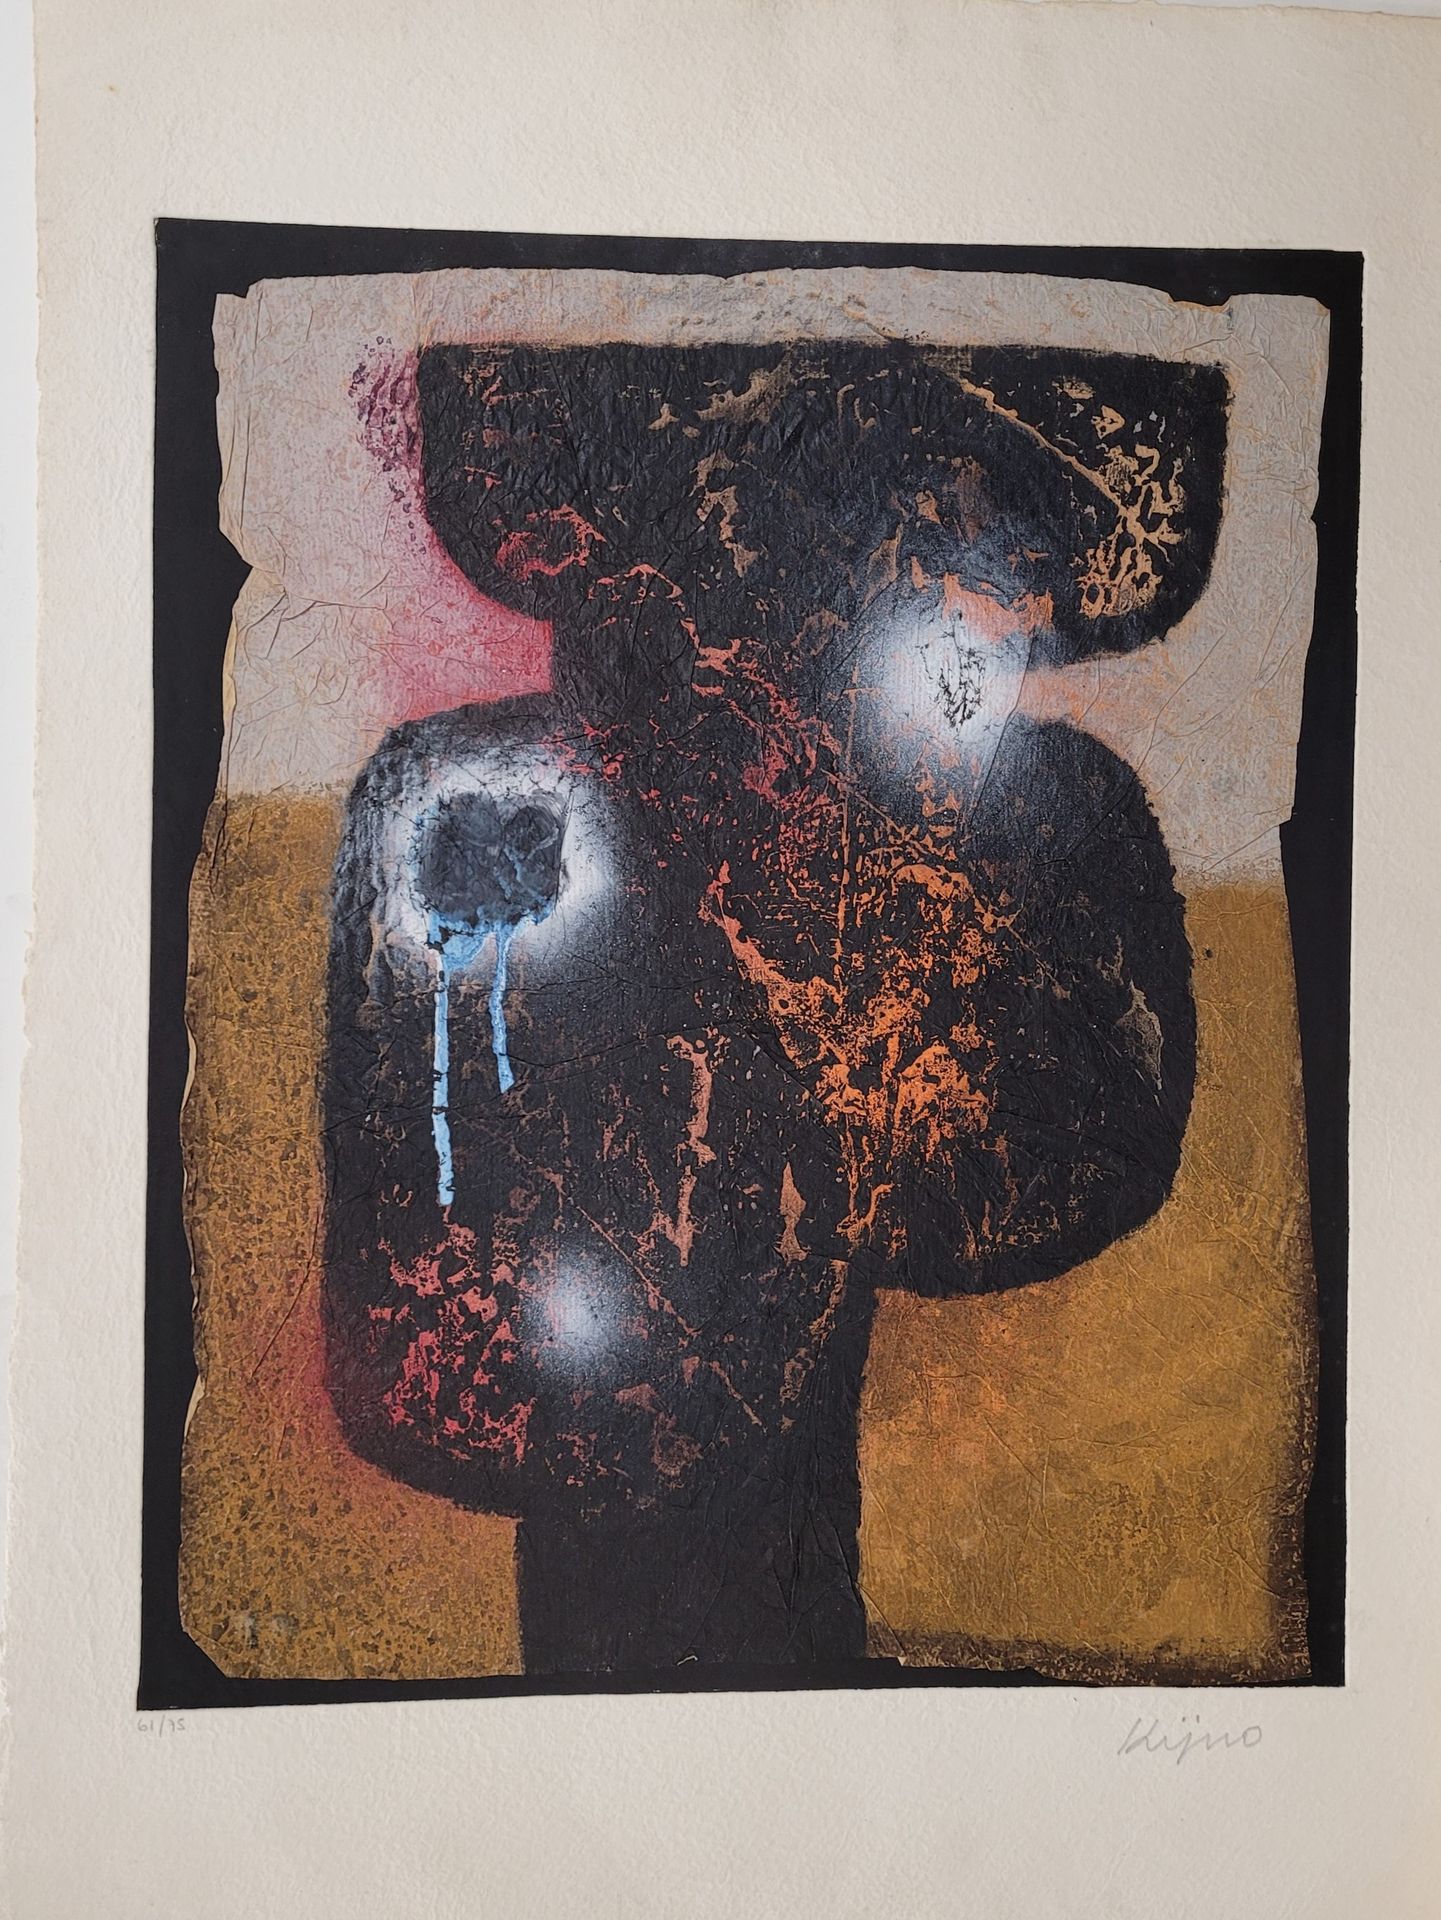 Null Ladislas Kijno (1921-2012) 

Komposition. Farbige Schablone auf zerknittert&hellip;